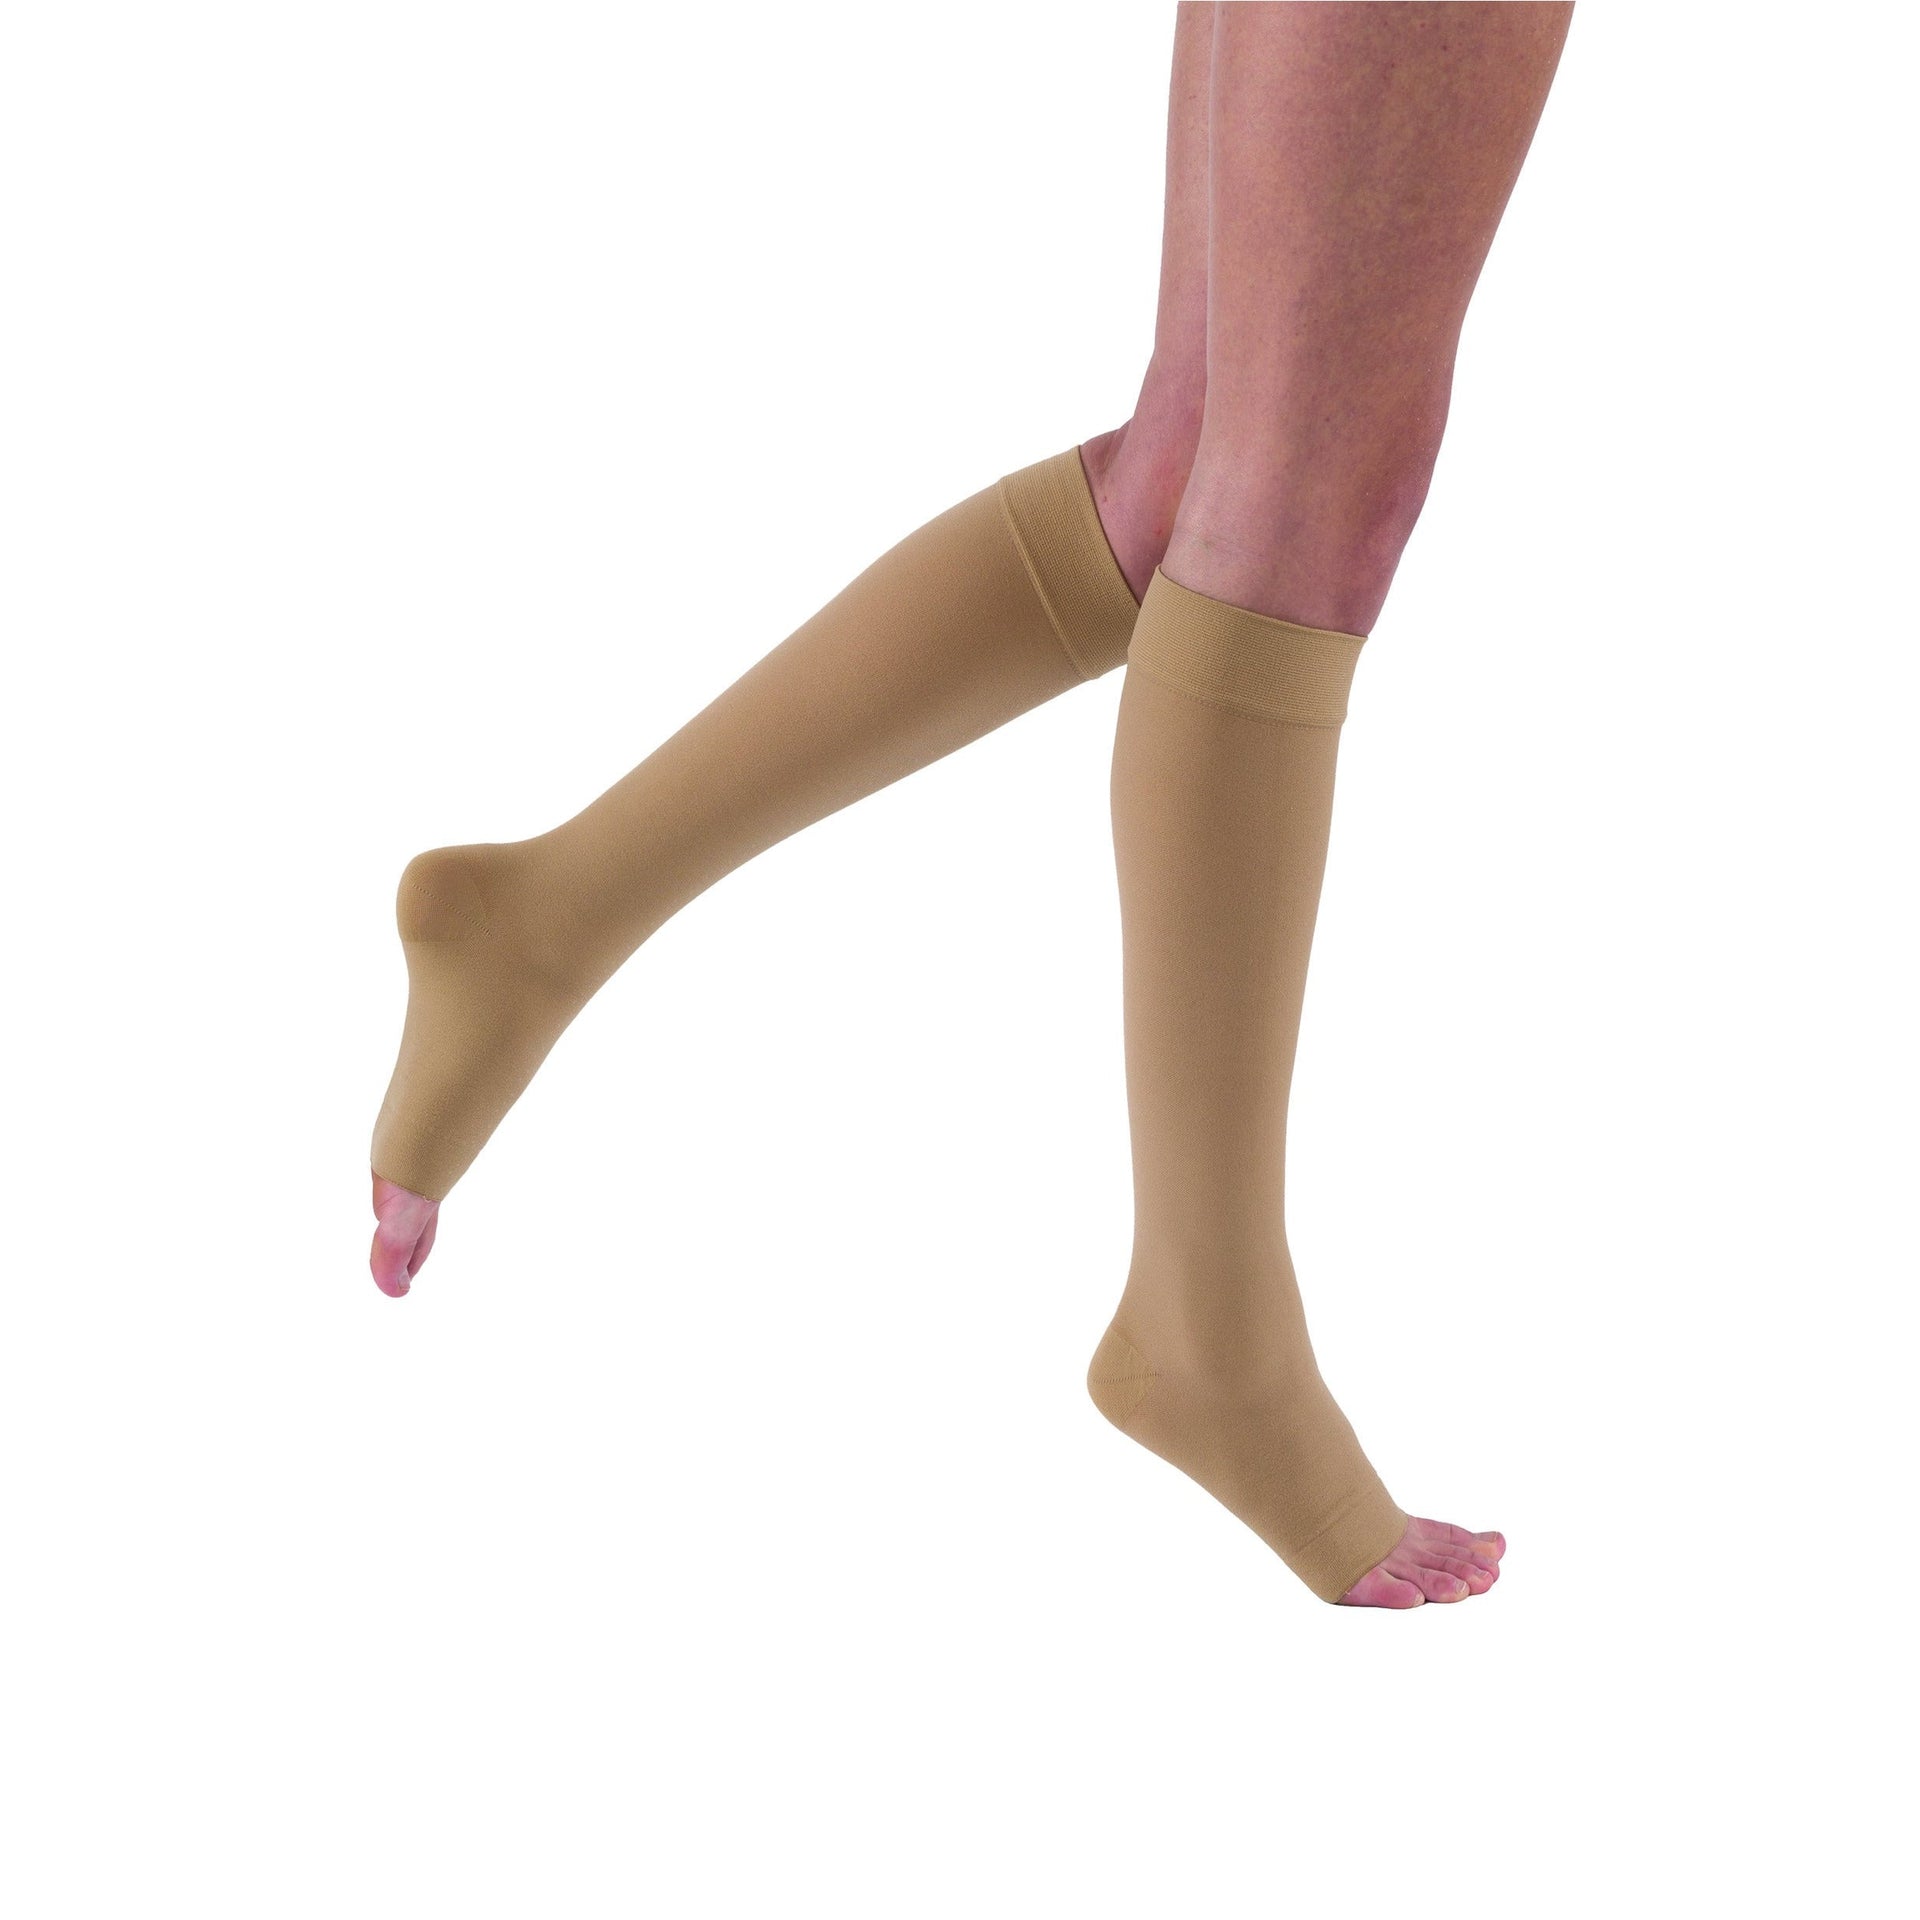 Womens Compression Leggings 20-30mmHg for Swelling Edema Diabetic - Beige,  XL 